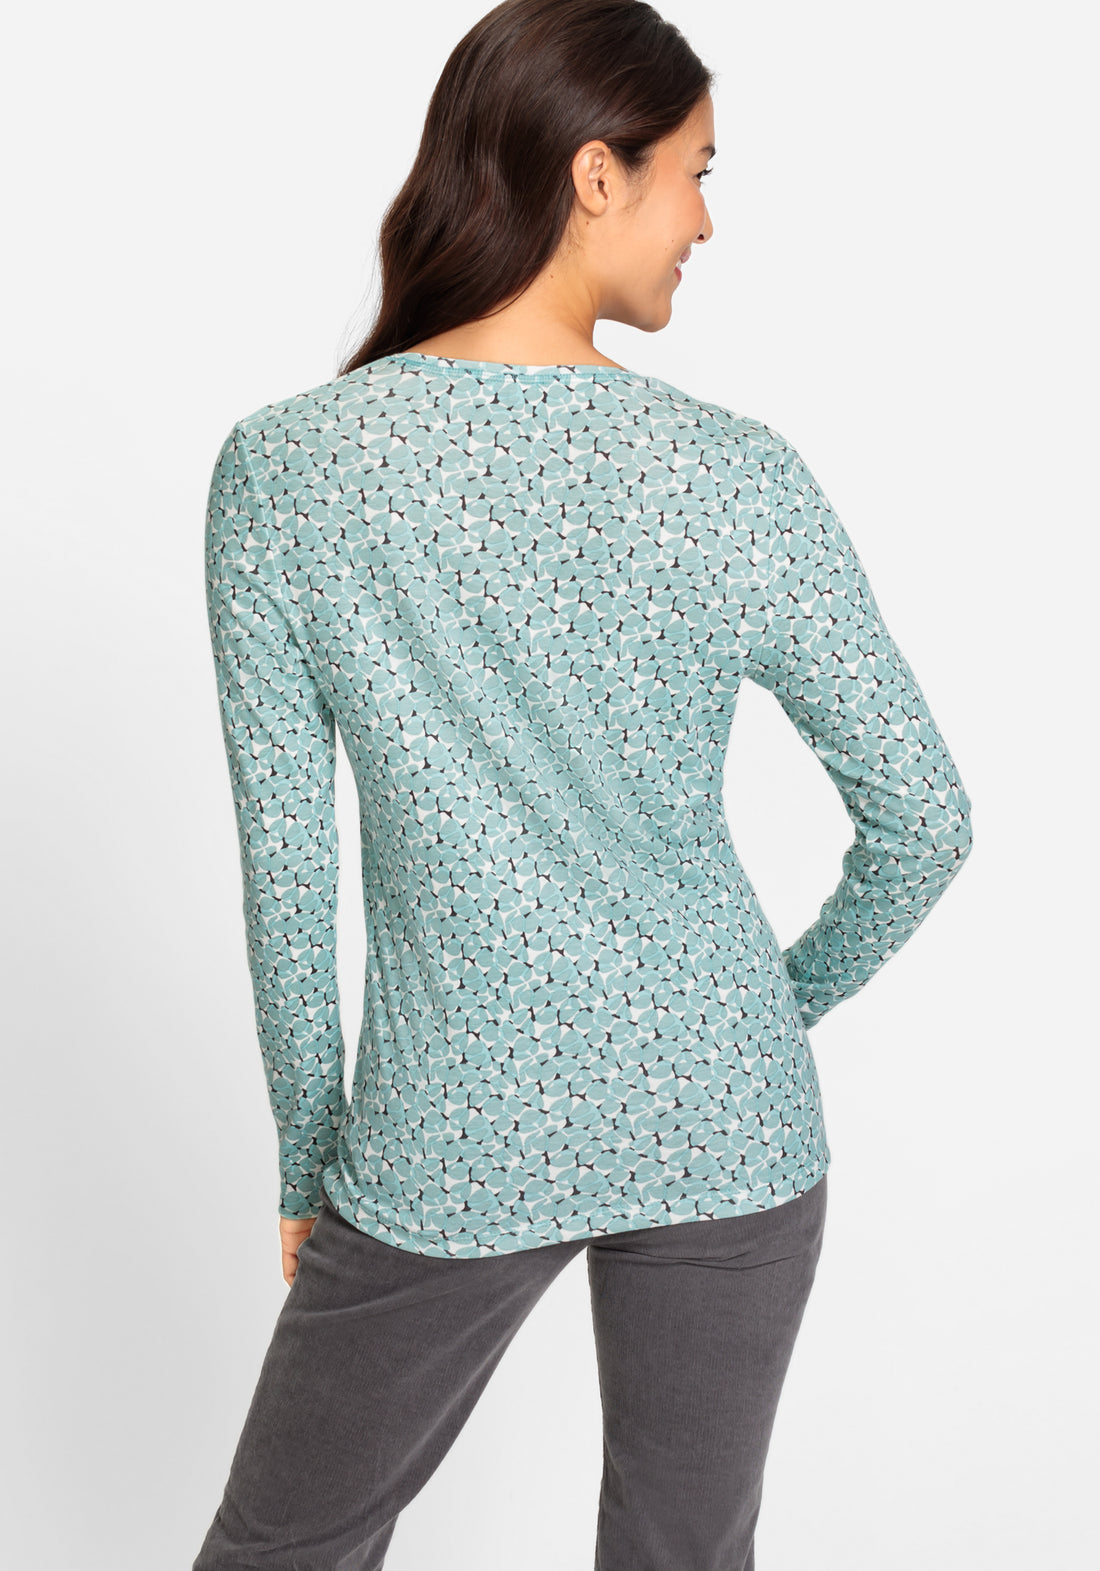 Olsen Pebble Print Shirt - Long Sleeves